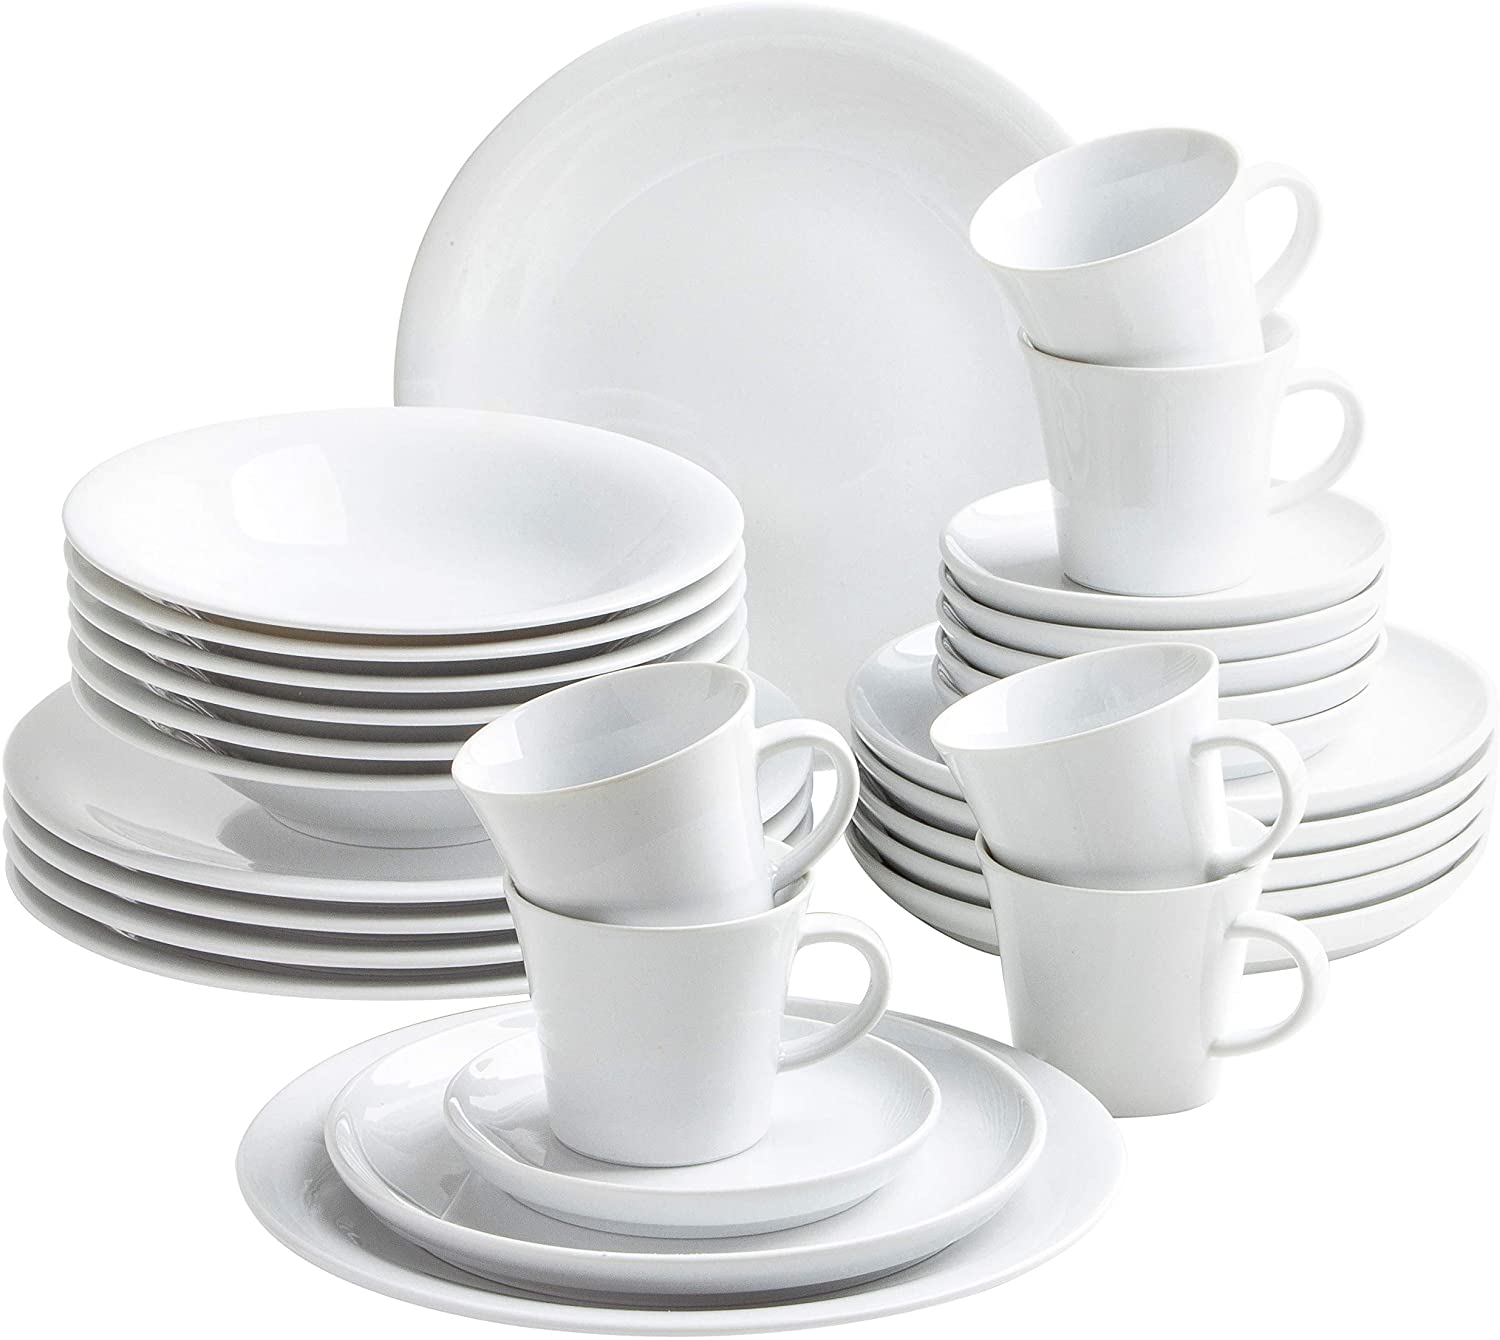 Kahla 320954M90032C Update Complete Set 30-Piece Crockery Set for 6 People Porcelain Service Round Modern White Dinner Service Cups Plates Soup Plates Dessert Plates